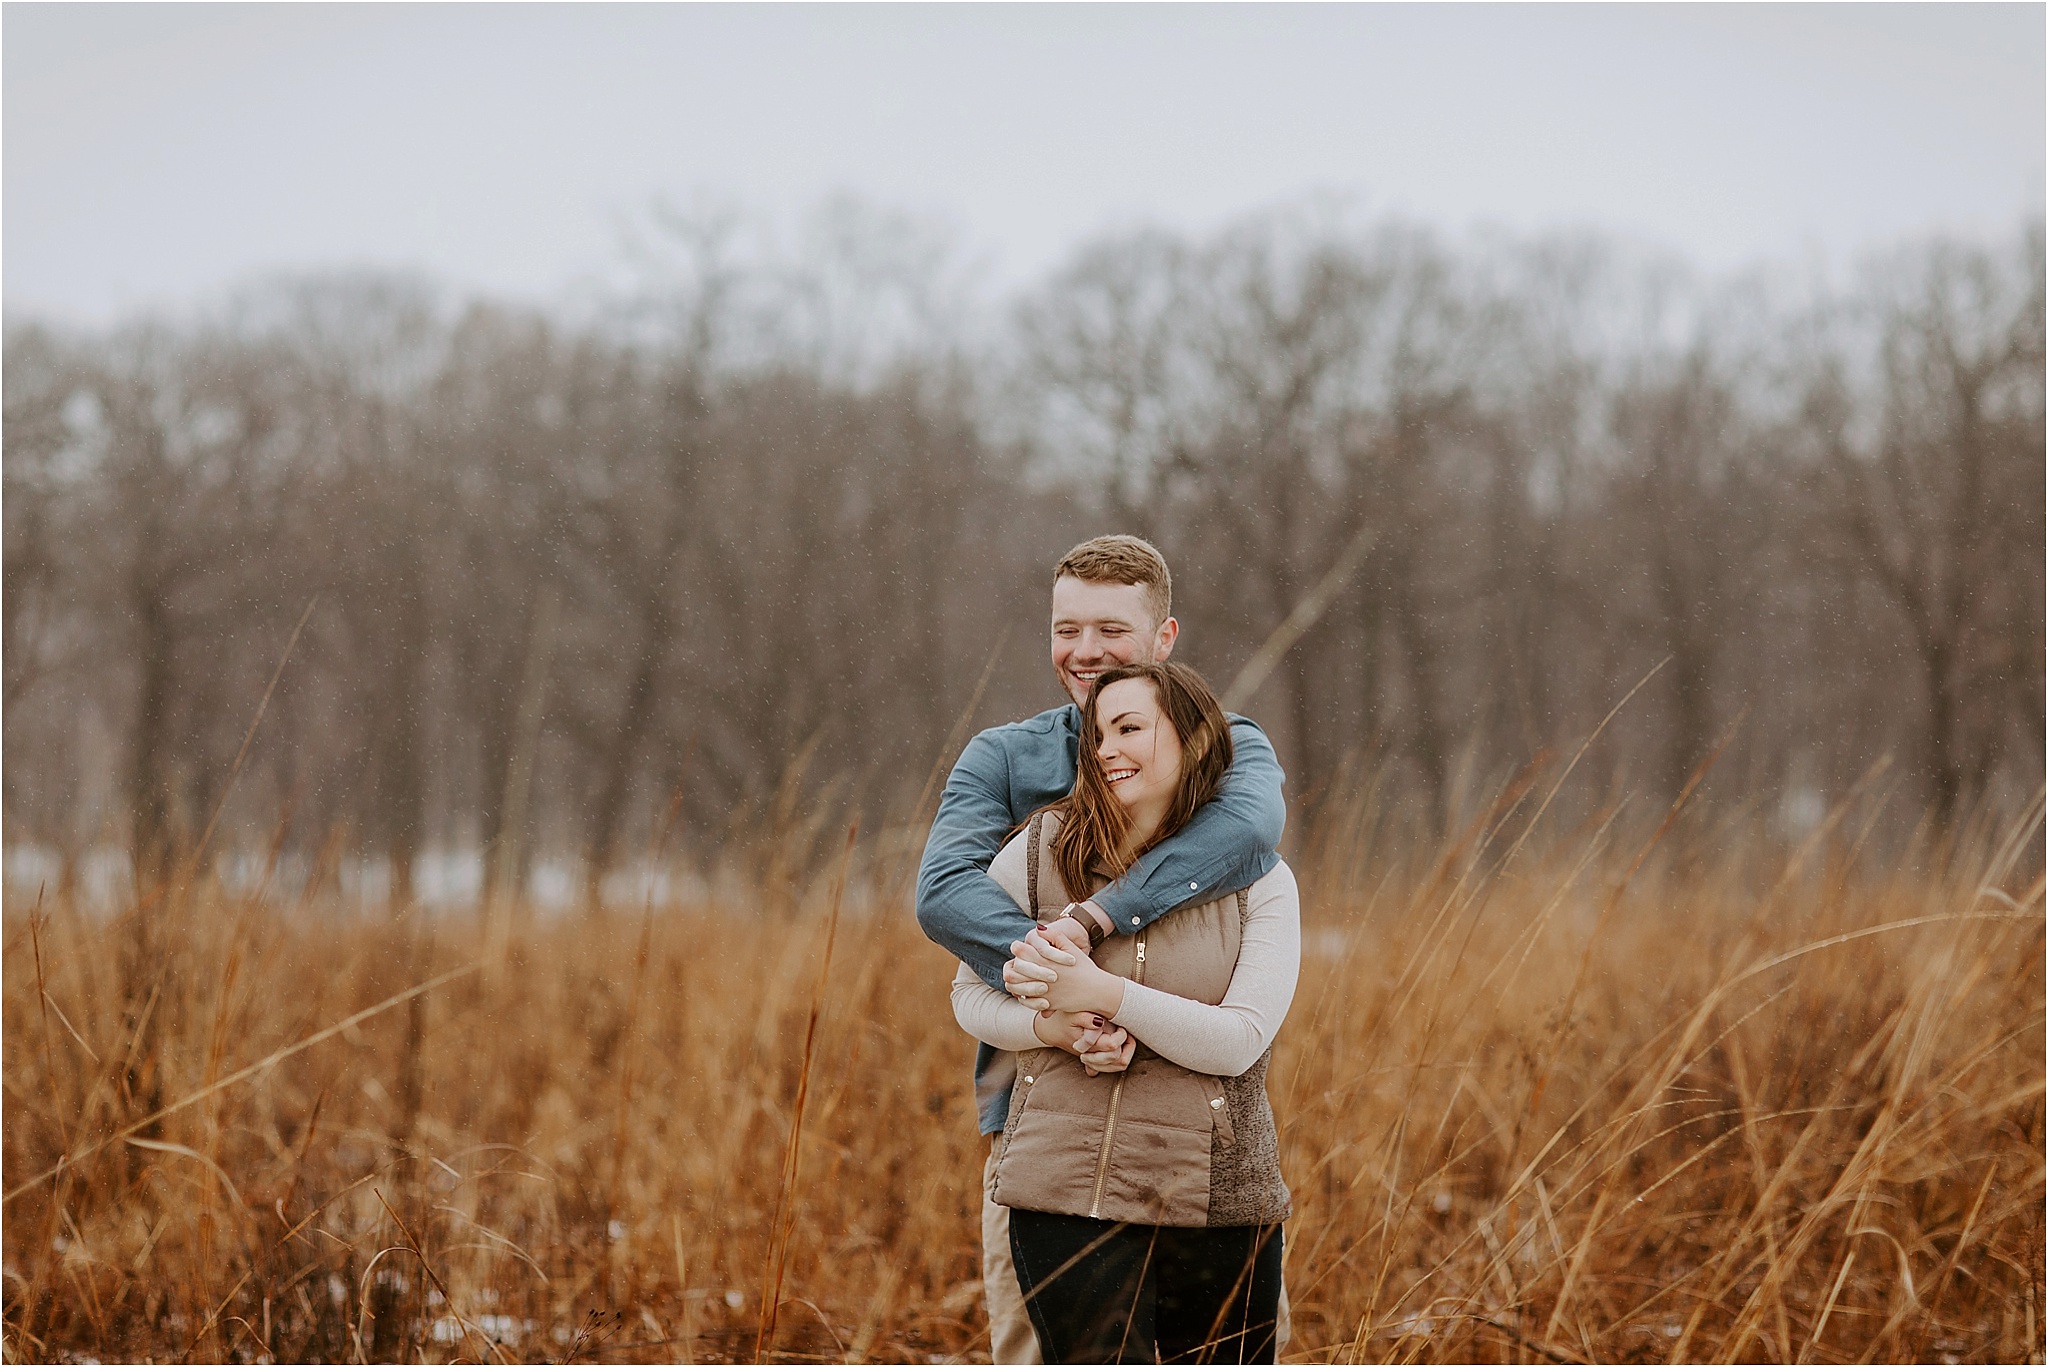 Winter Engagement Session at Morton Arboretum. Chicago Wedding Photographer